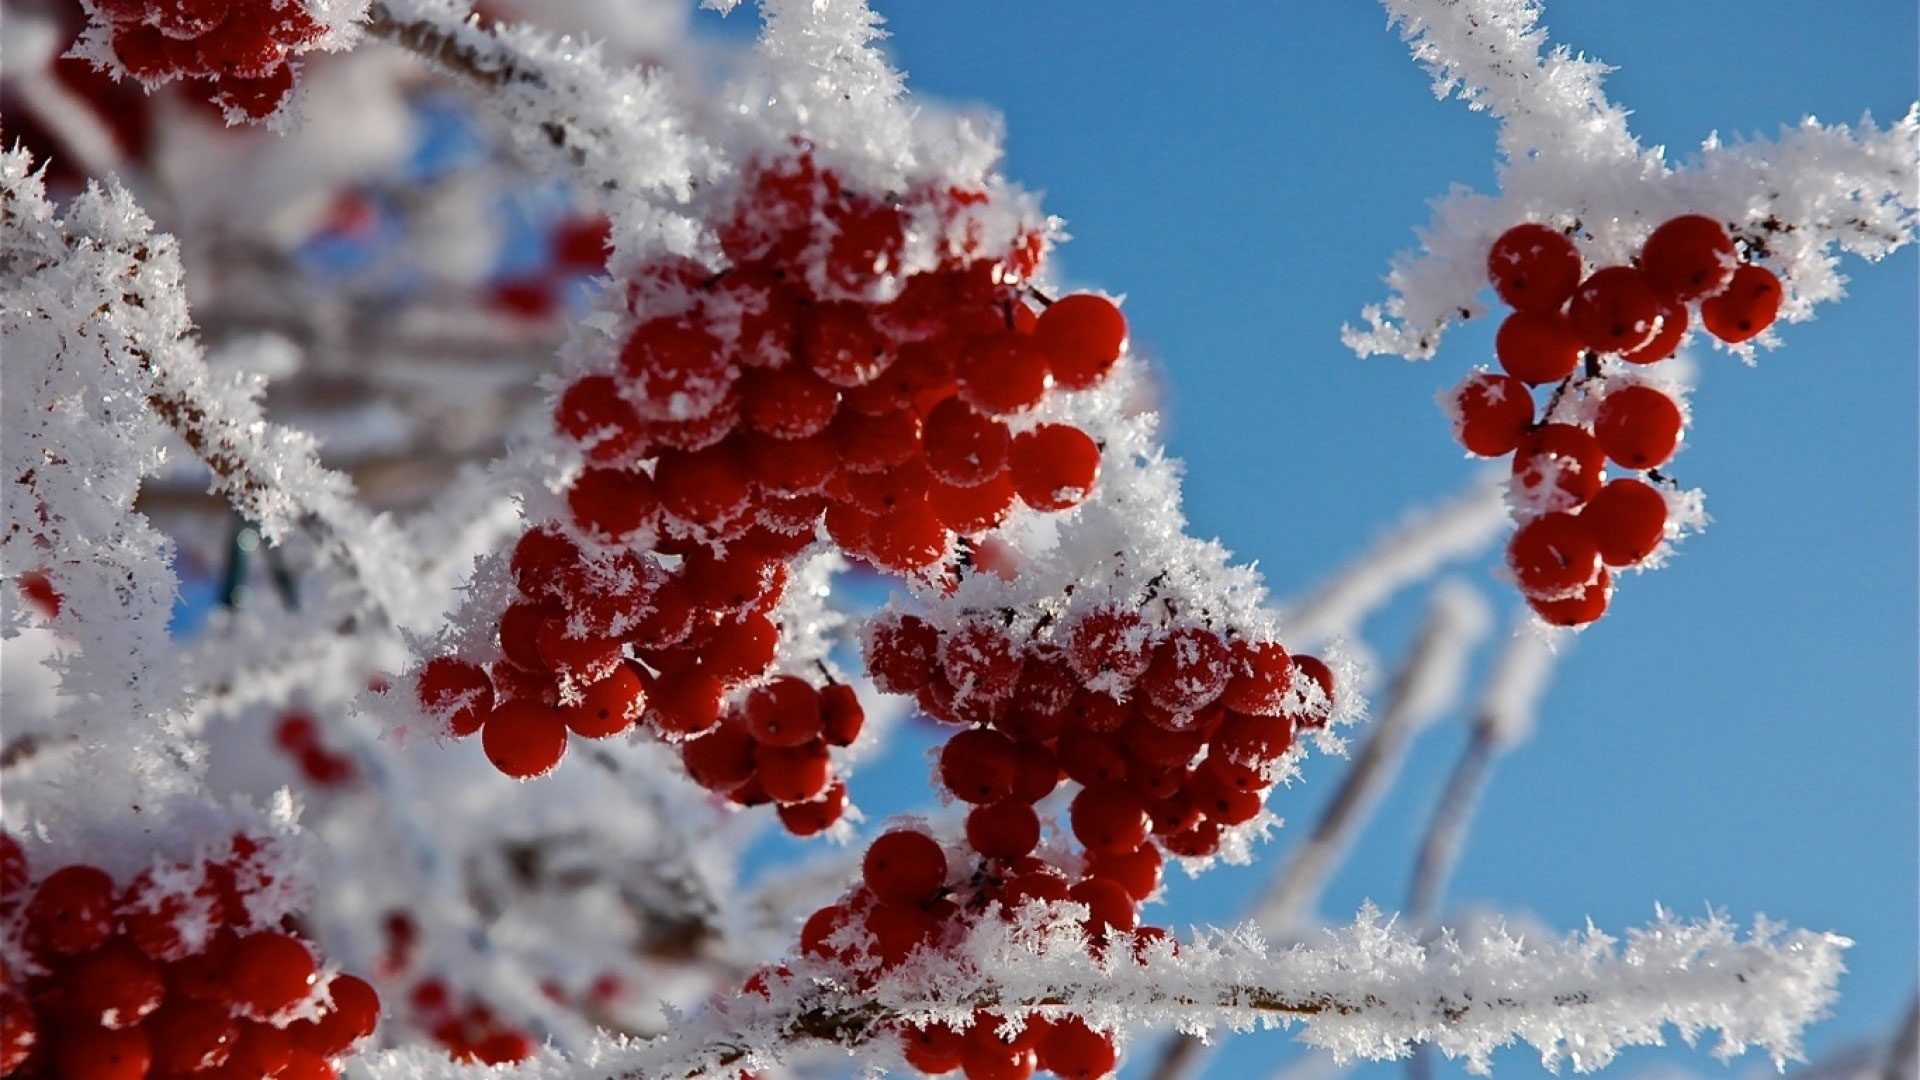 Beautiful photo of winter nature